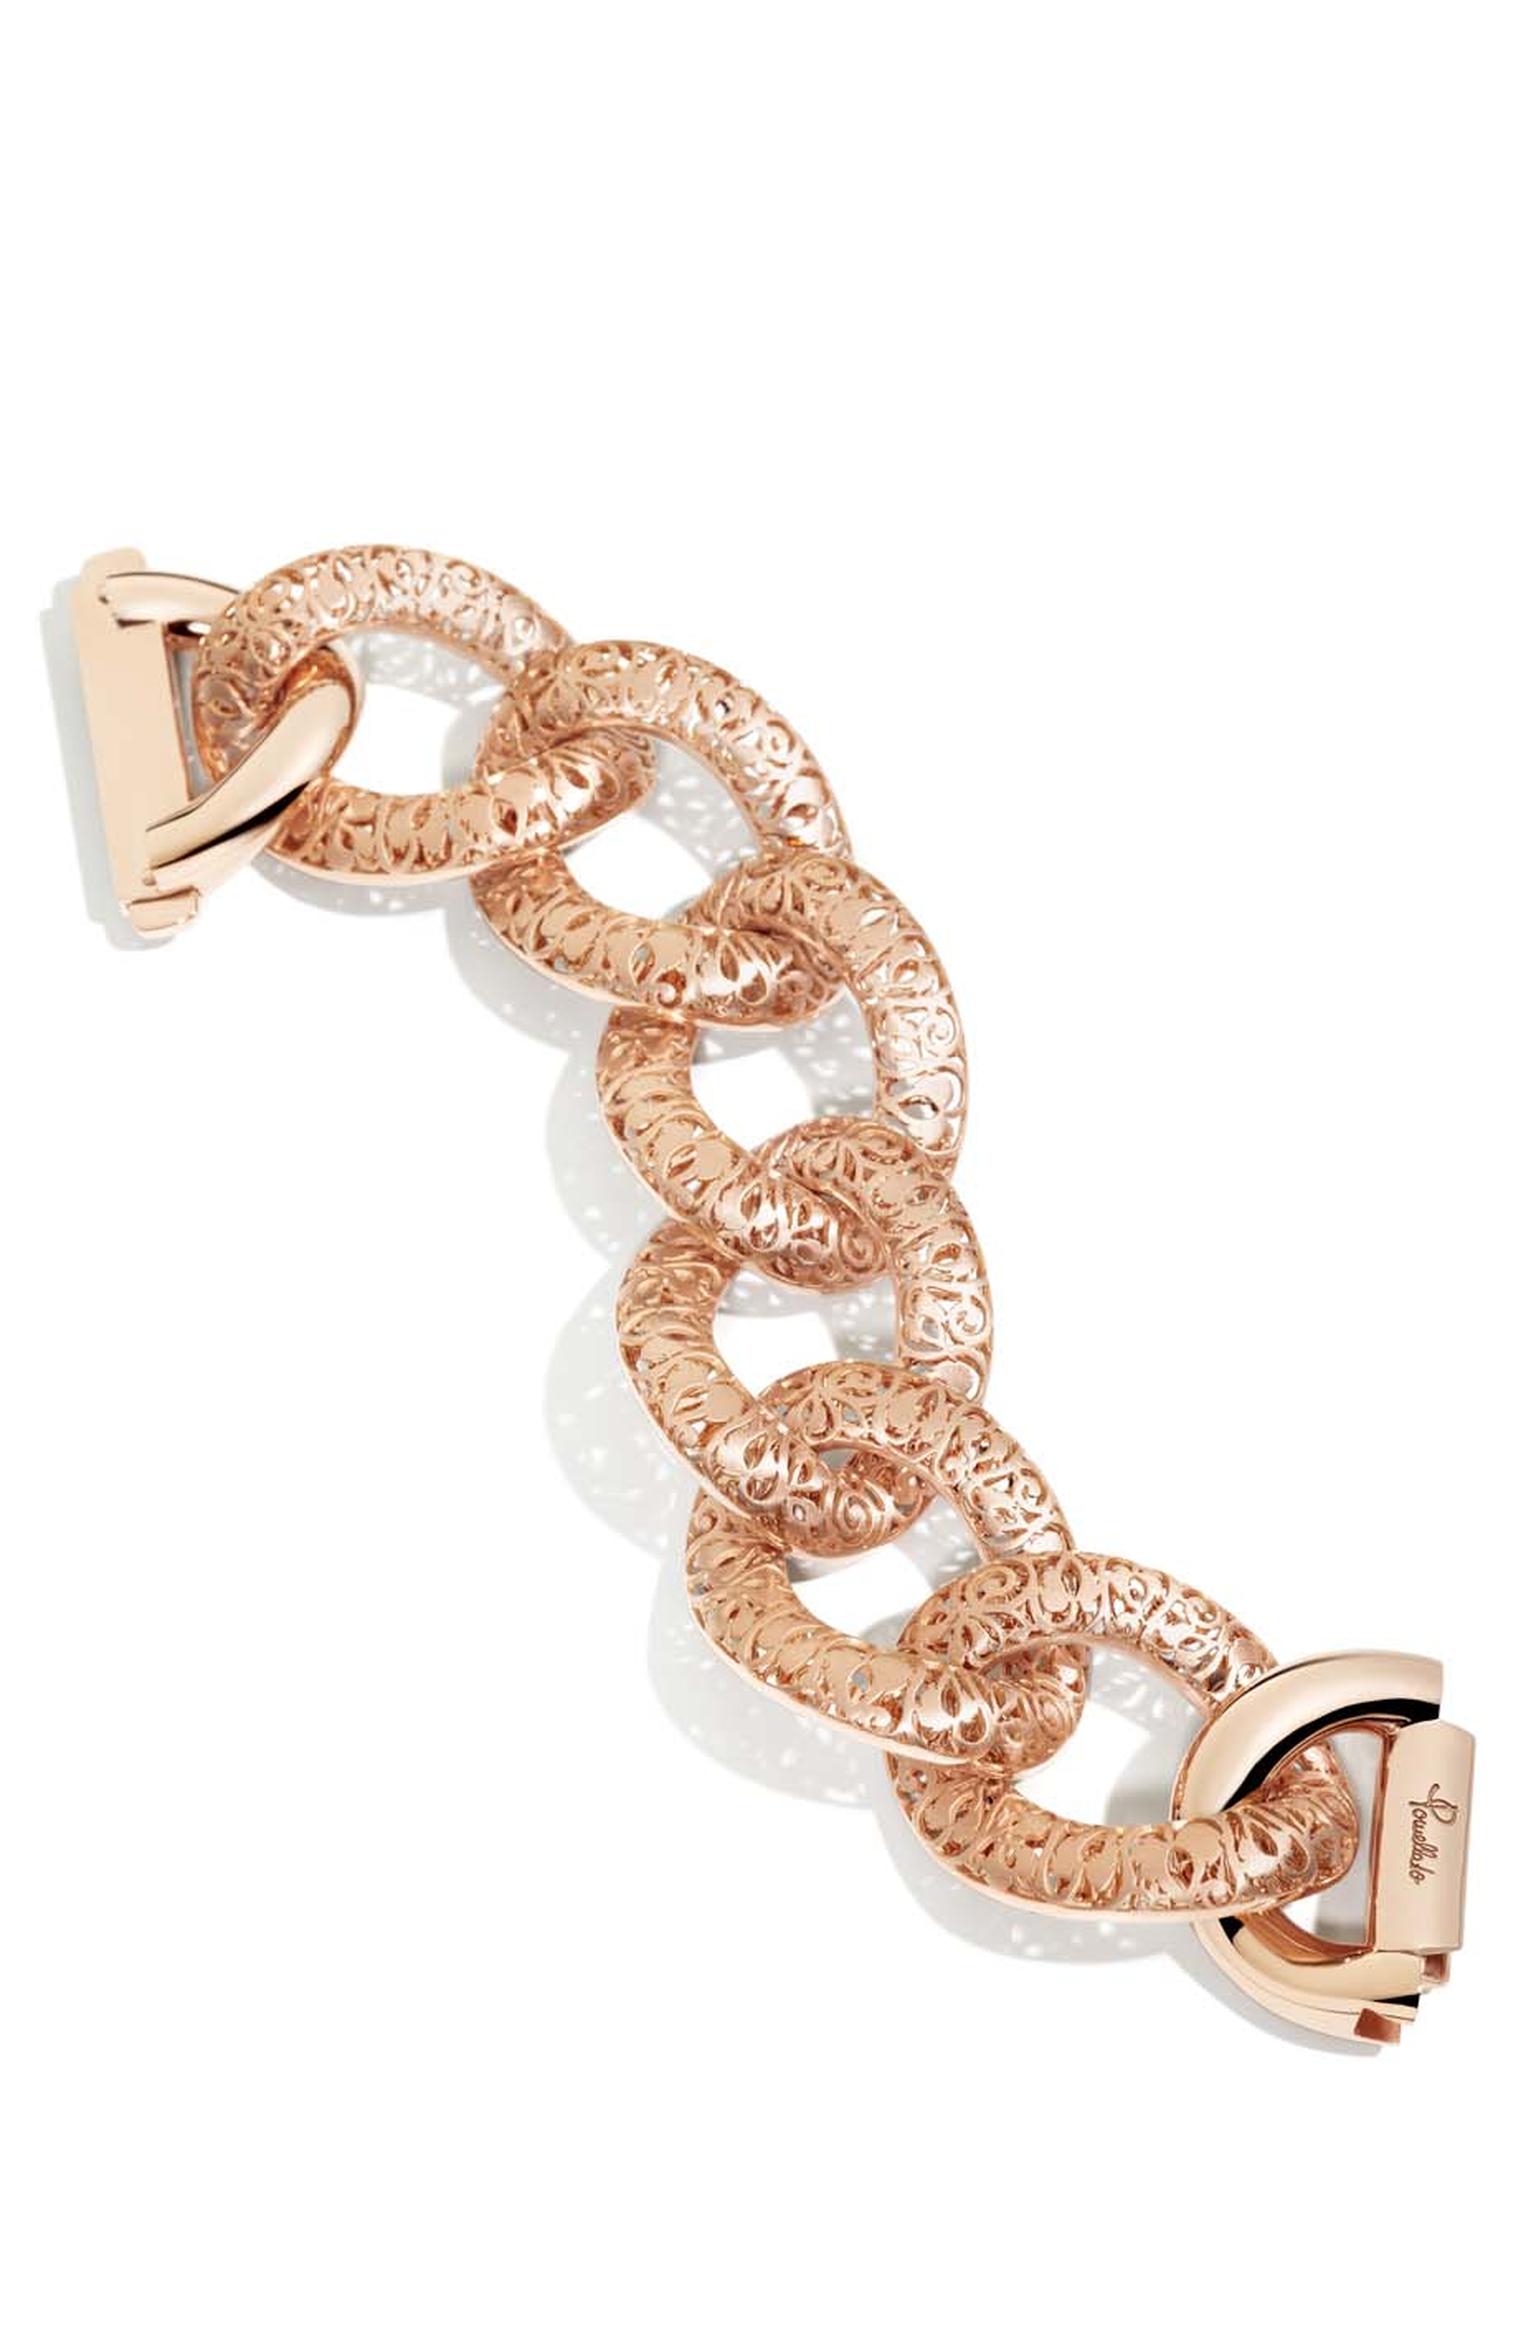 Pomellato Arabesque collection bracelet in rose gold (£23,800).